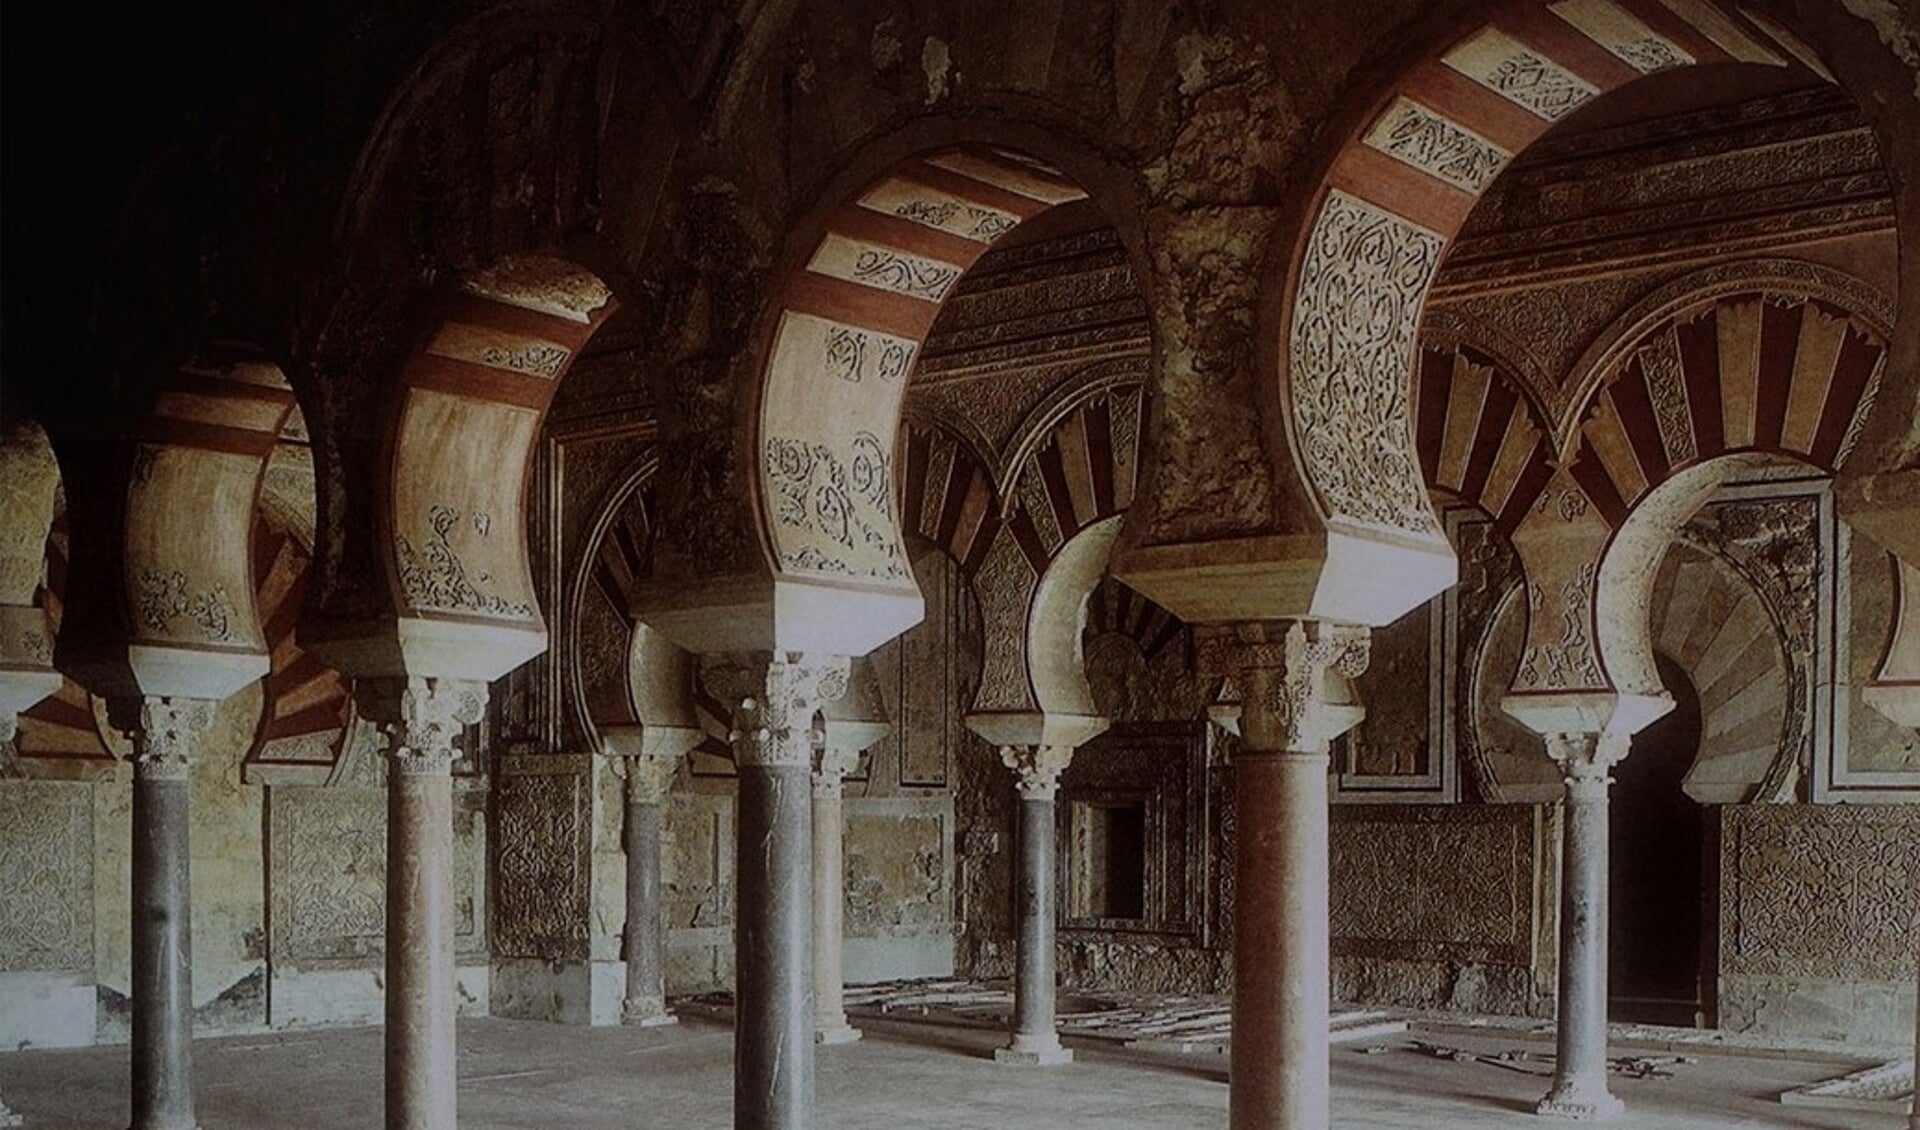 Mezquita moskee/kathedraal in Cordoba